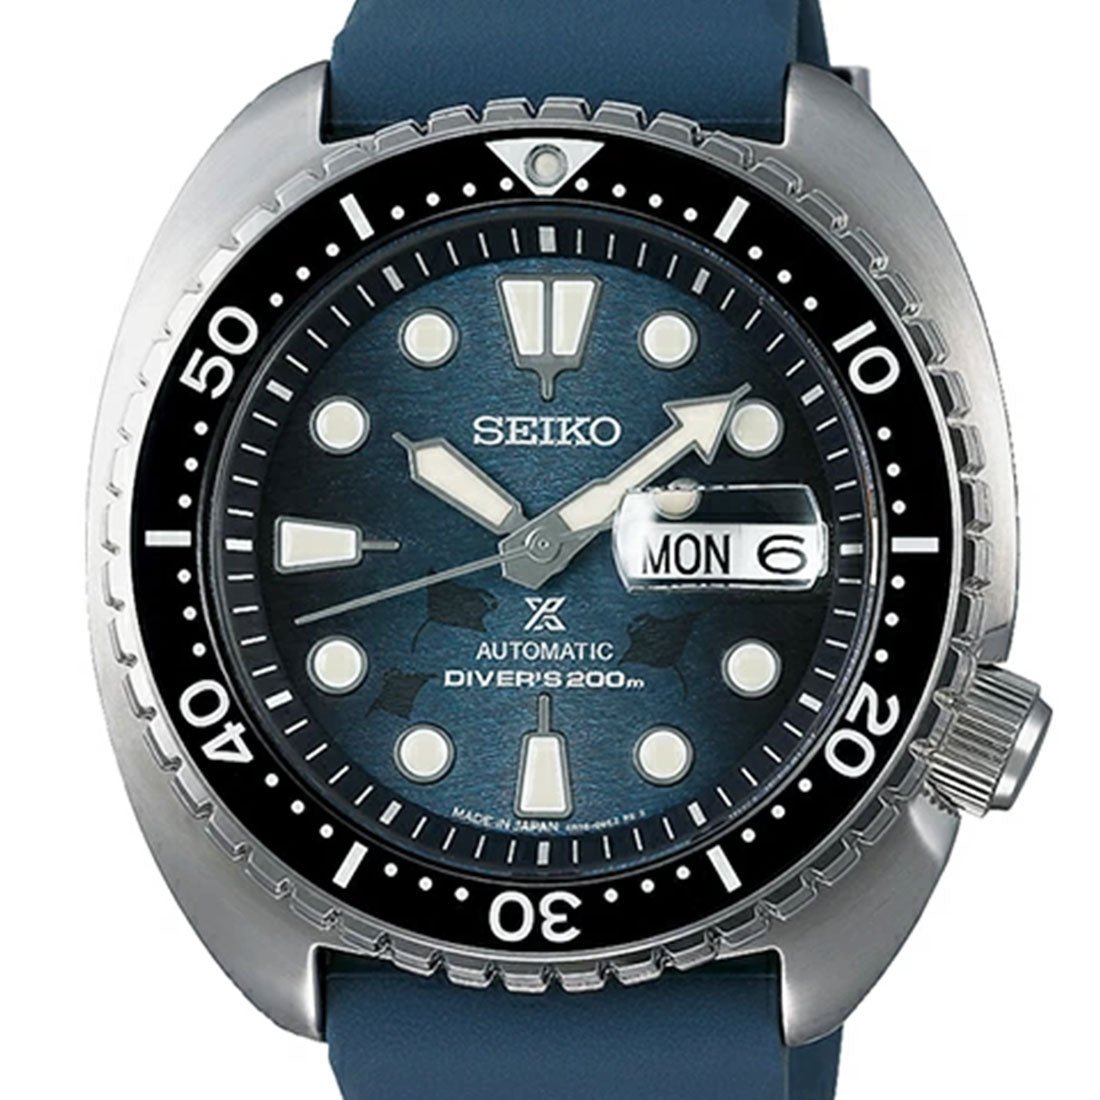 Seiko Prospex Manta Ray Divers JDM Watch SBDY079 -Seiko